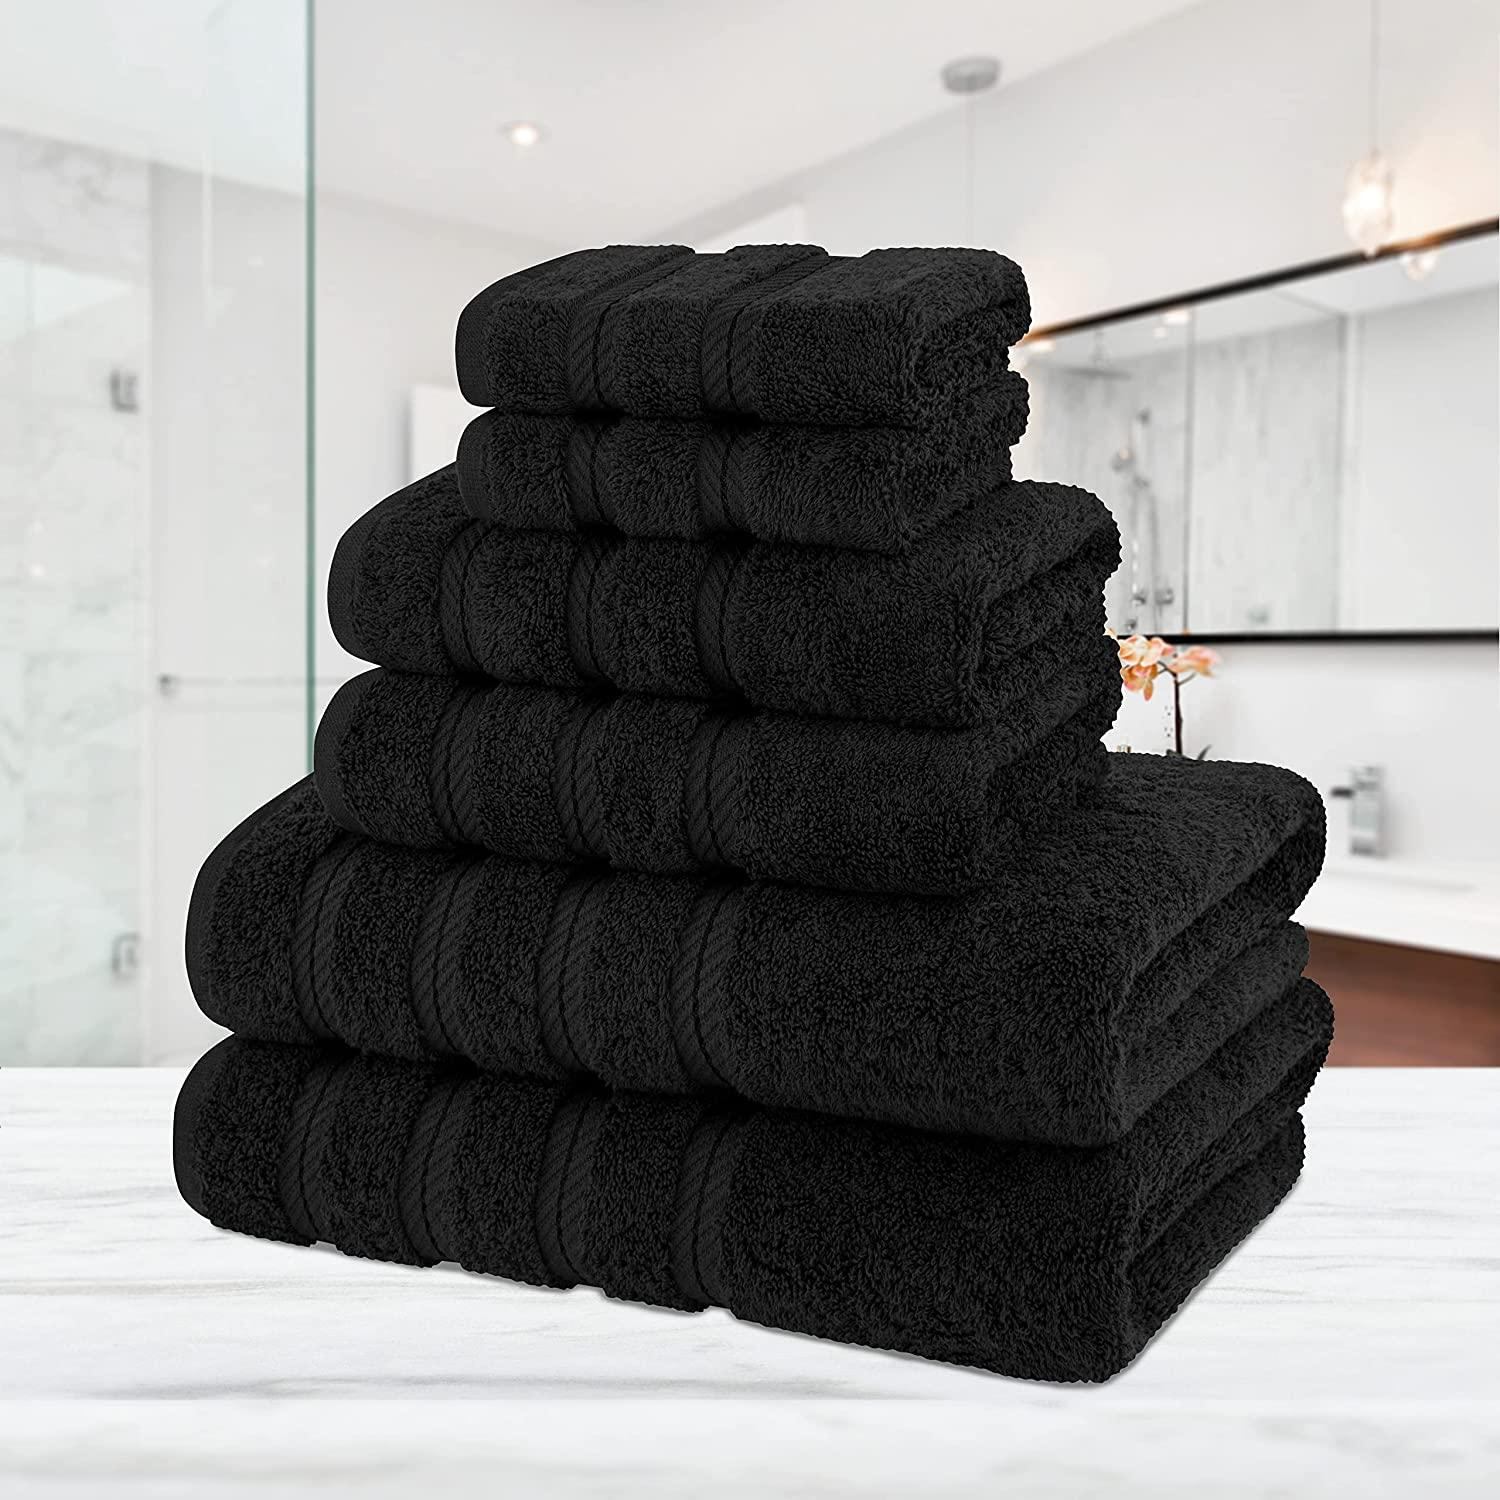 American Soft Linen, 6 Piece Towel Set, 2 Bath Towels 2 Hand Towels 2 Washcloths, Super Soft and Absorbent, 100% Turkish Cotton Towels for Bathroom and Kitchen Shower Towel, Black - Airbnb Ambassador